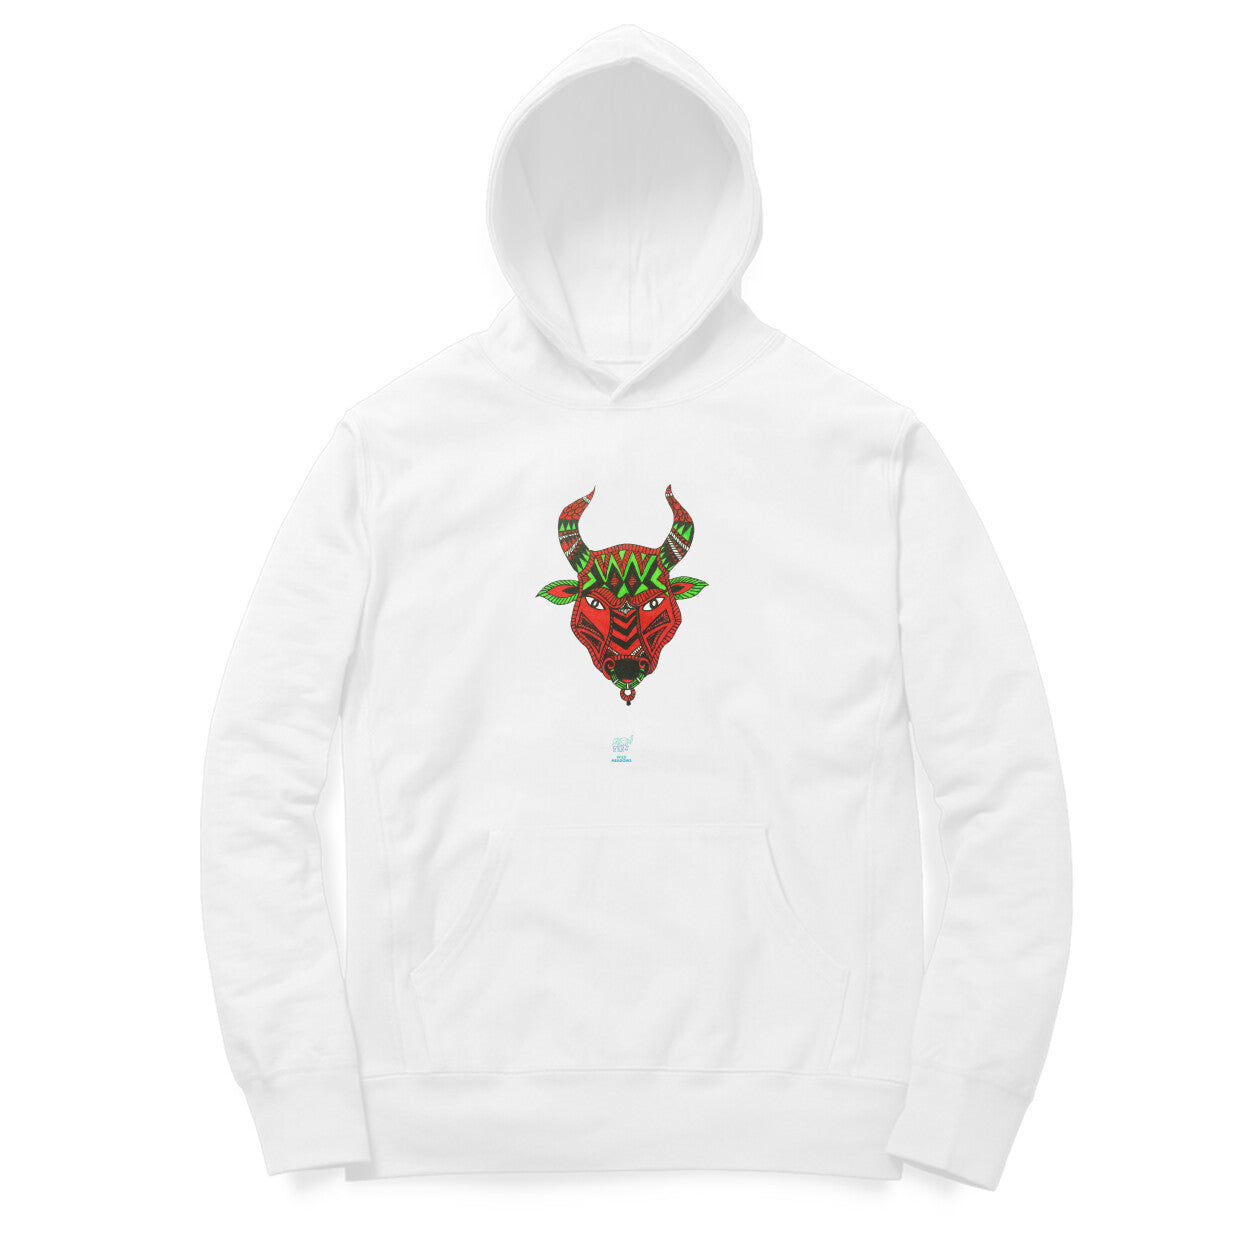 Bull - Unisex Hooded Sweatshirt